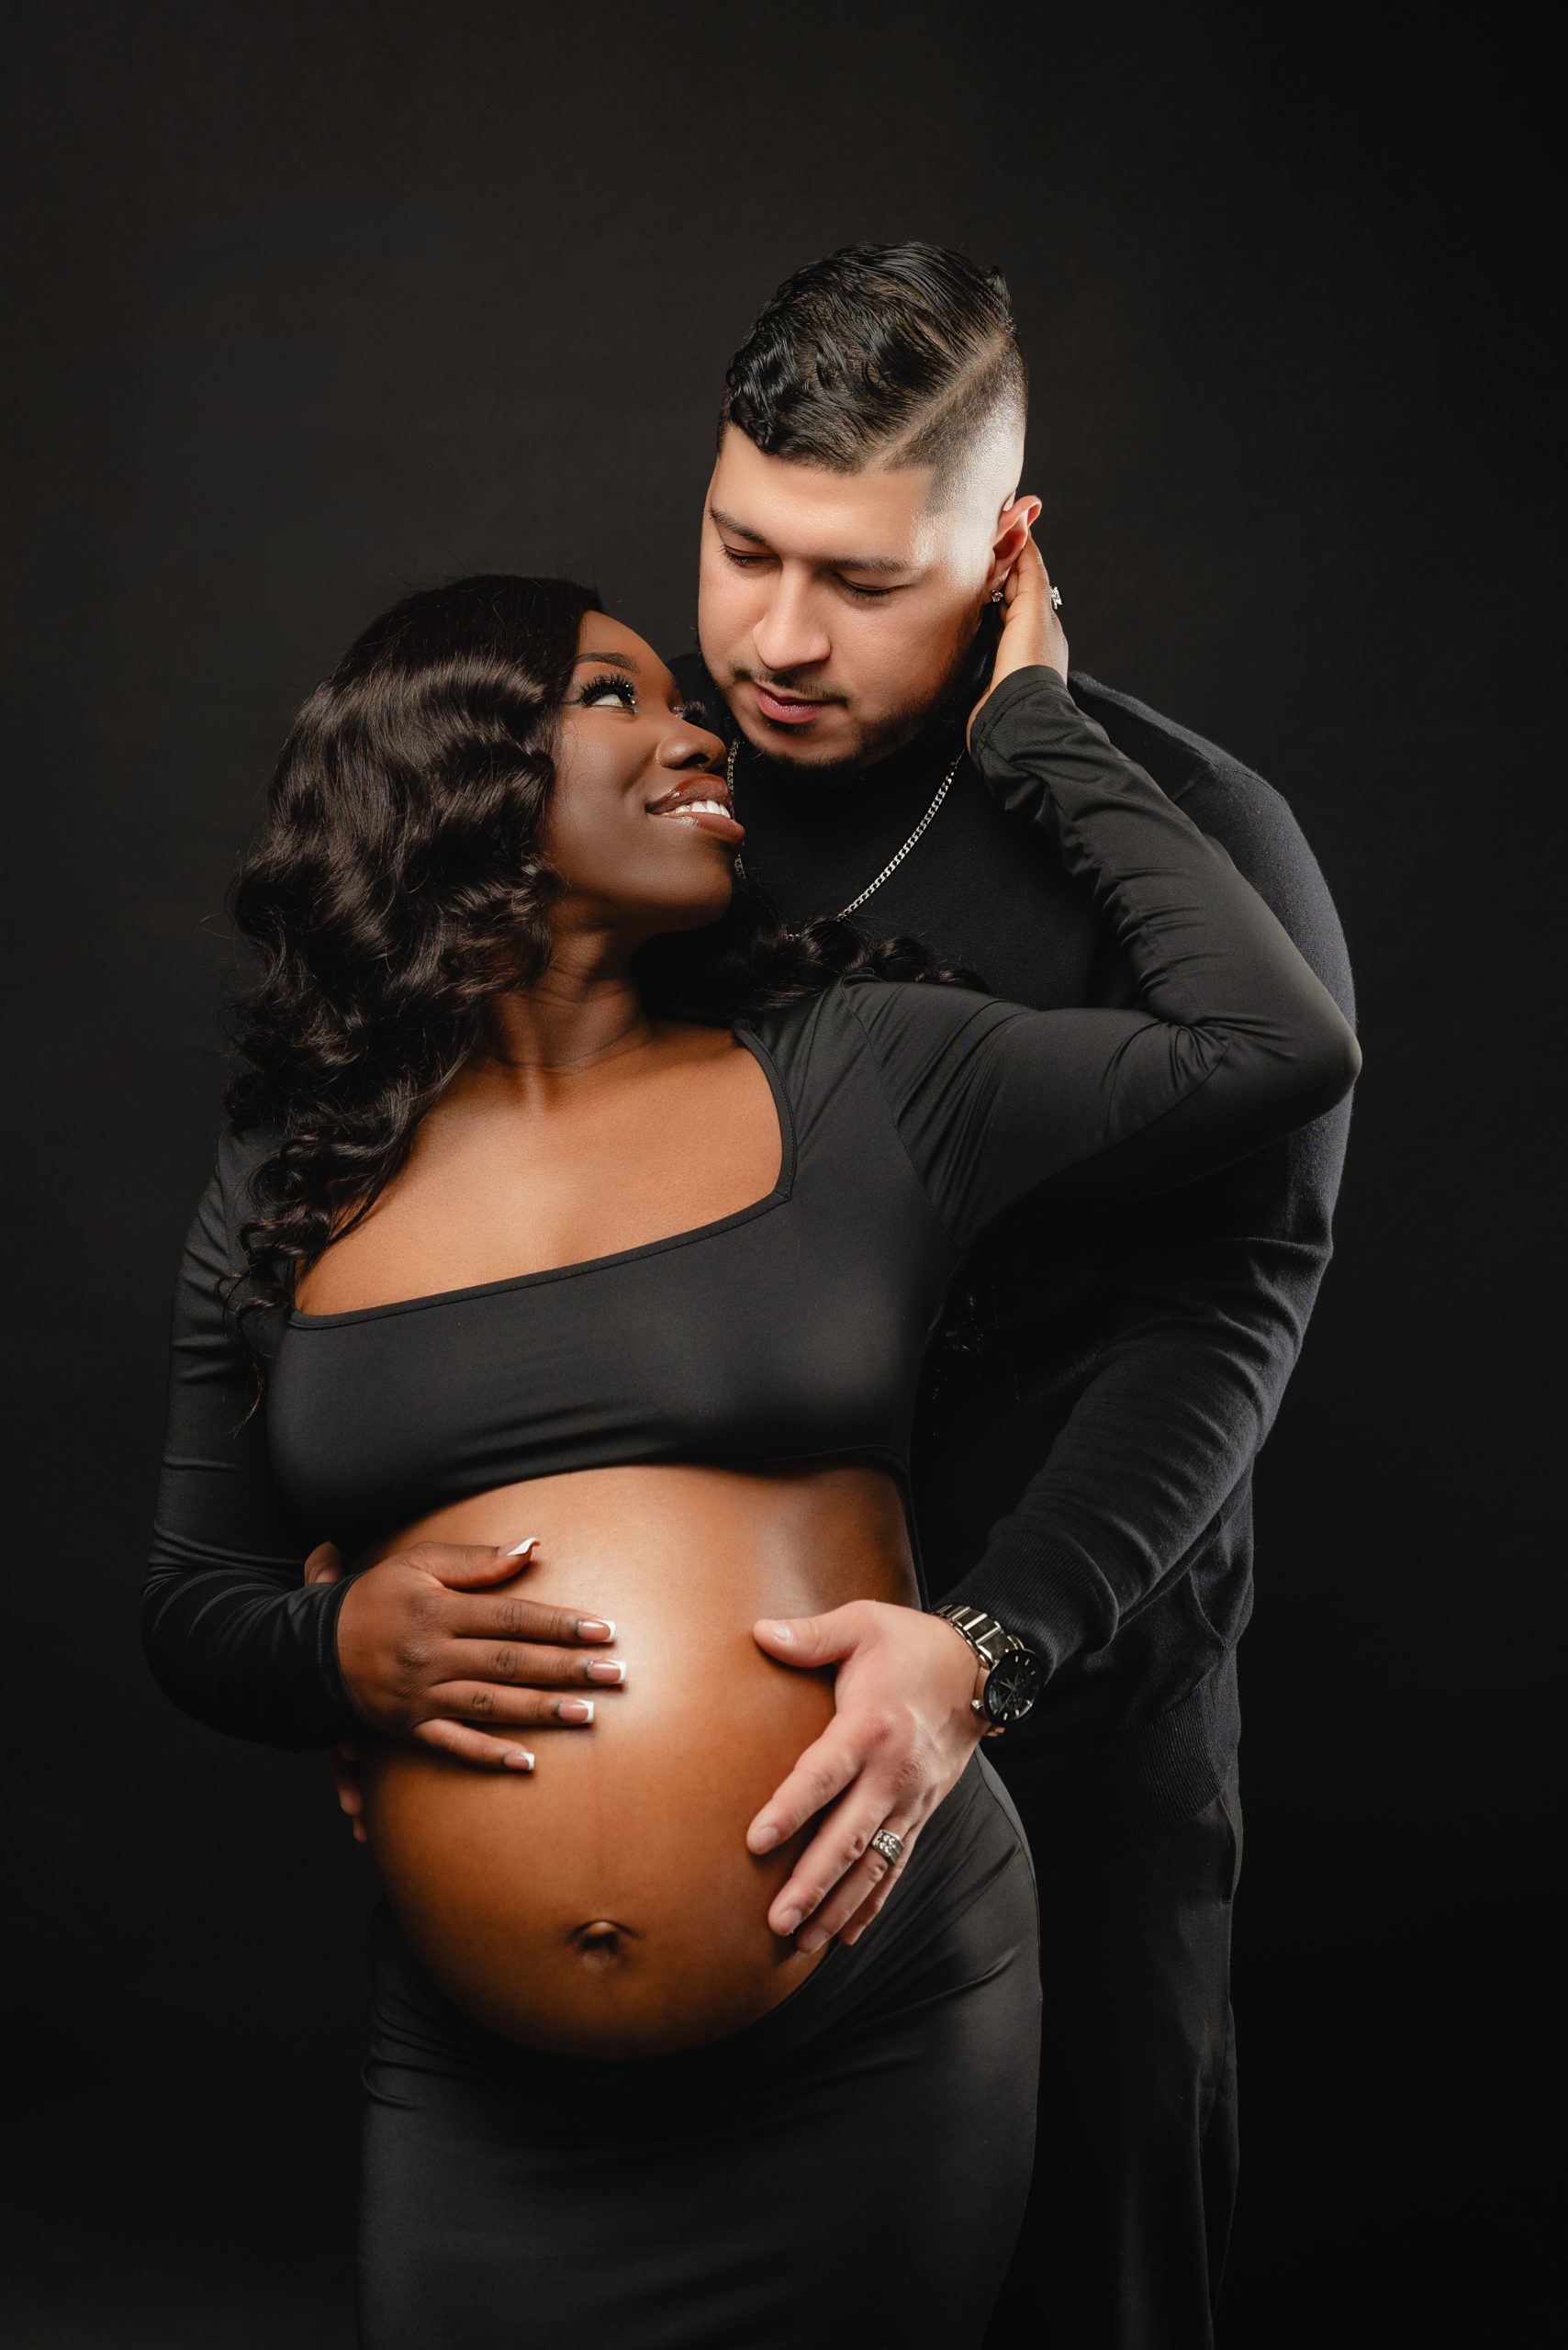 Maternity photography, Jacksonville FL, Carolennys Studios, Fine Art Maternity Photography, Studio Photography, maternity couple